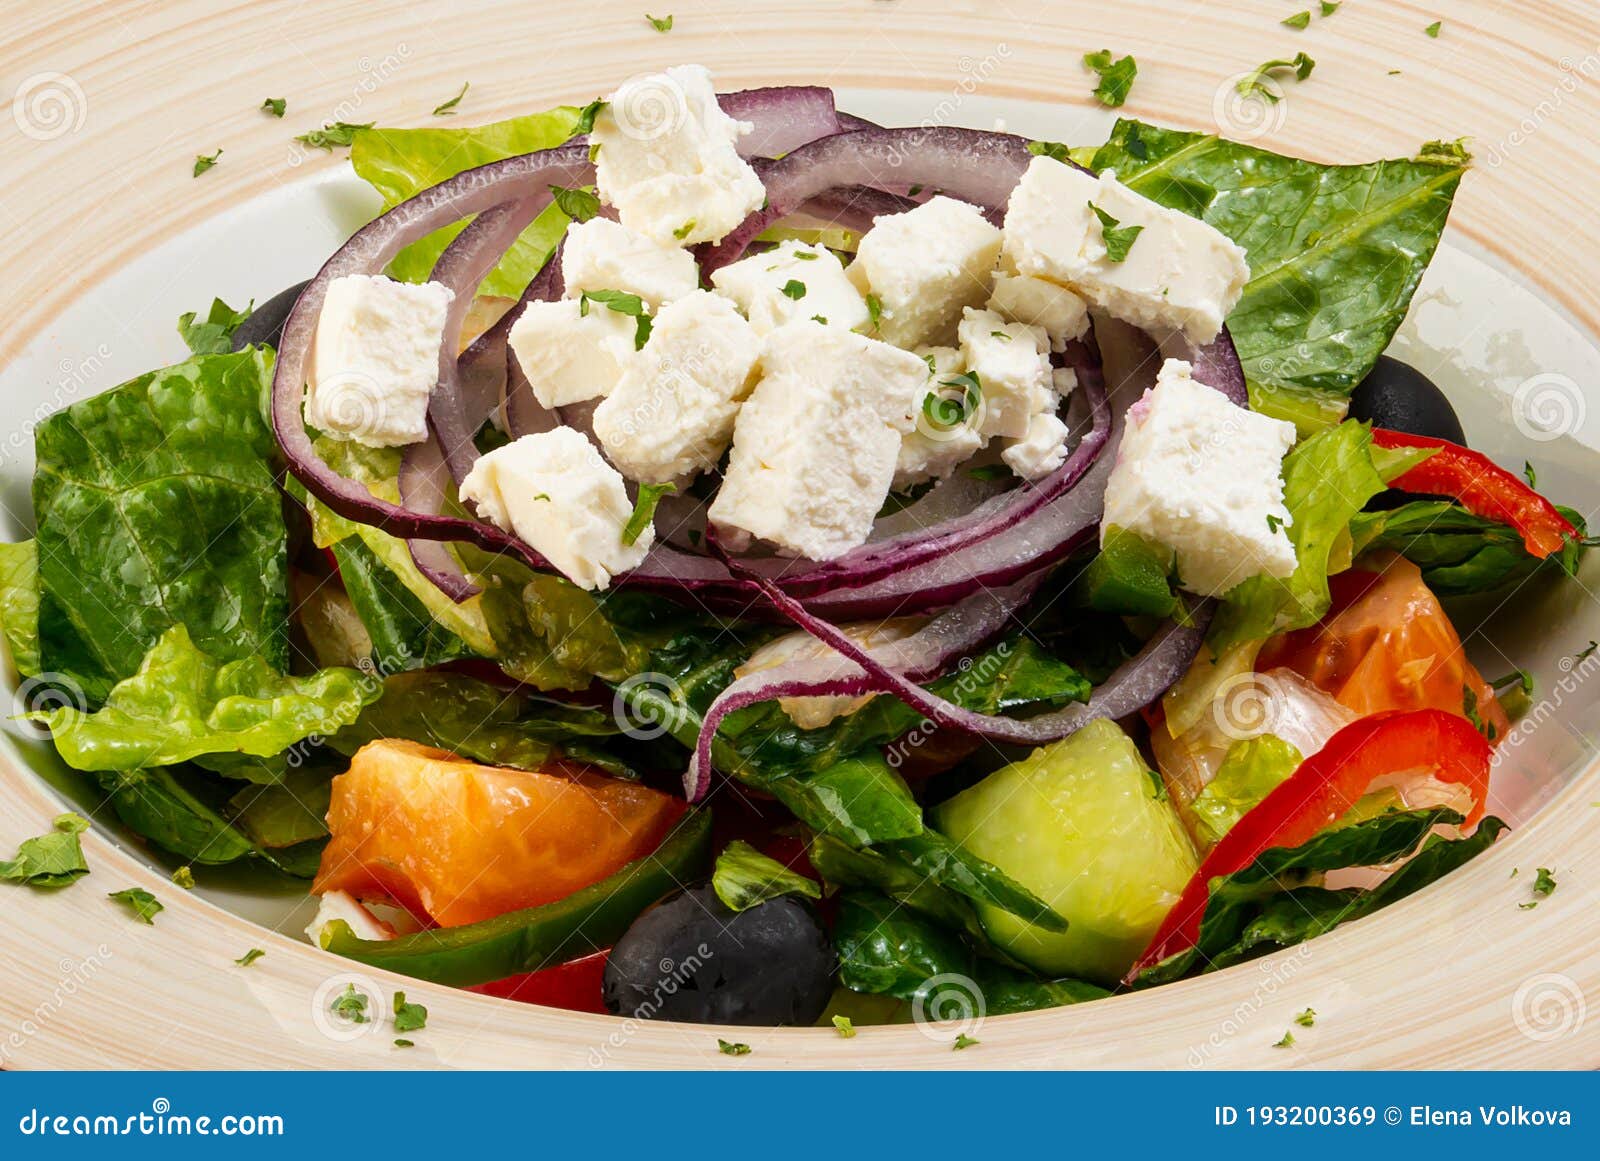 greek salad on a plate closeup